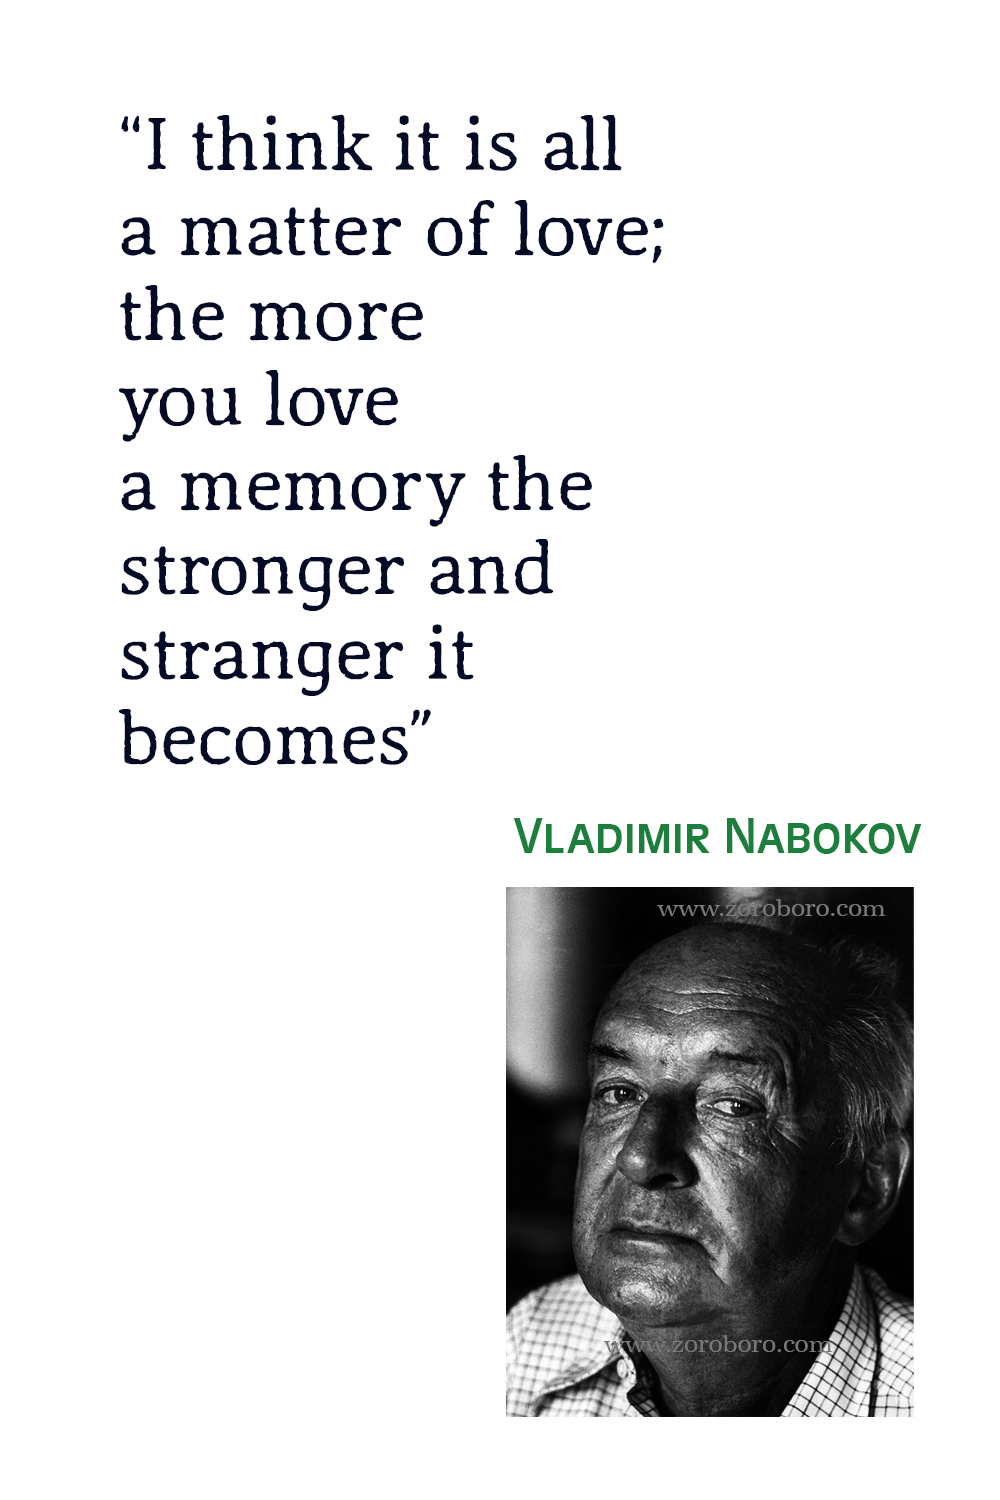 Vladimir Nabokov Quotes, Vladimir Nabokov Lolita Quotes, Vladimir Nabokov Books, Vladimir Nabokov Pale Fire, Vladimir Nabokov Poems, Poetry.